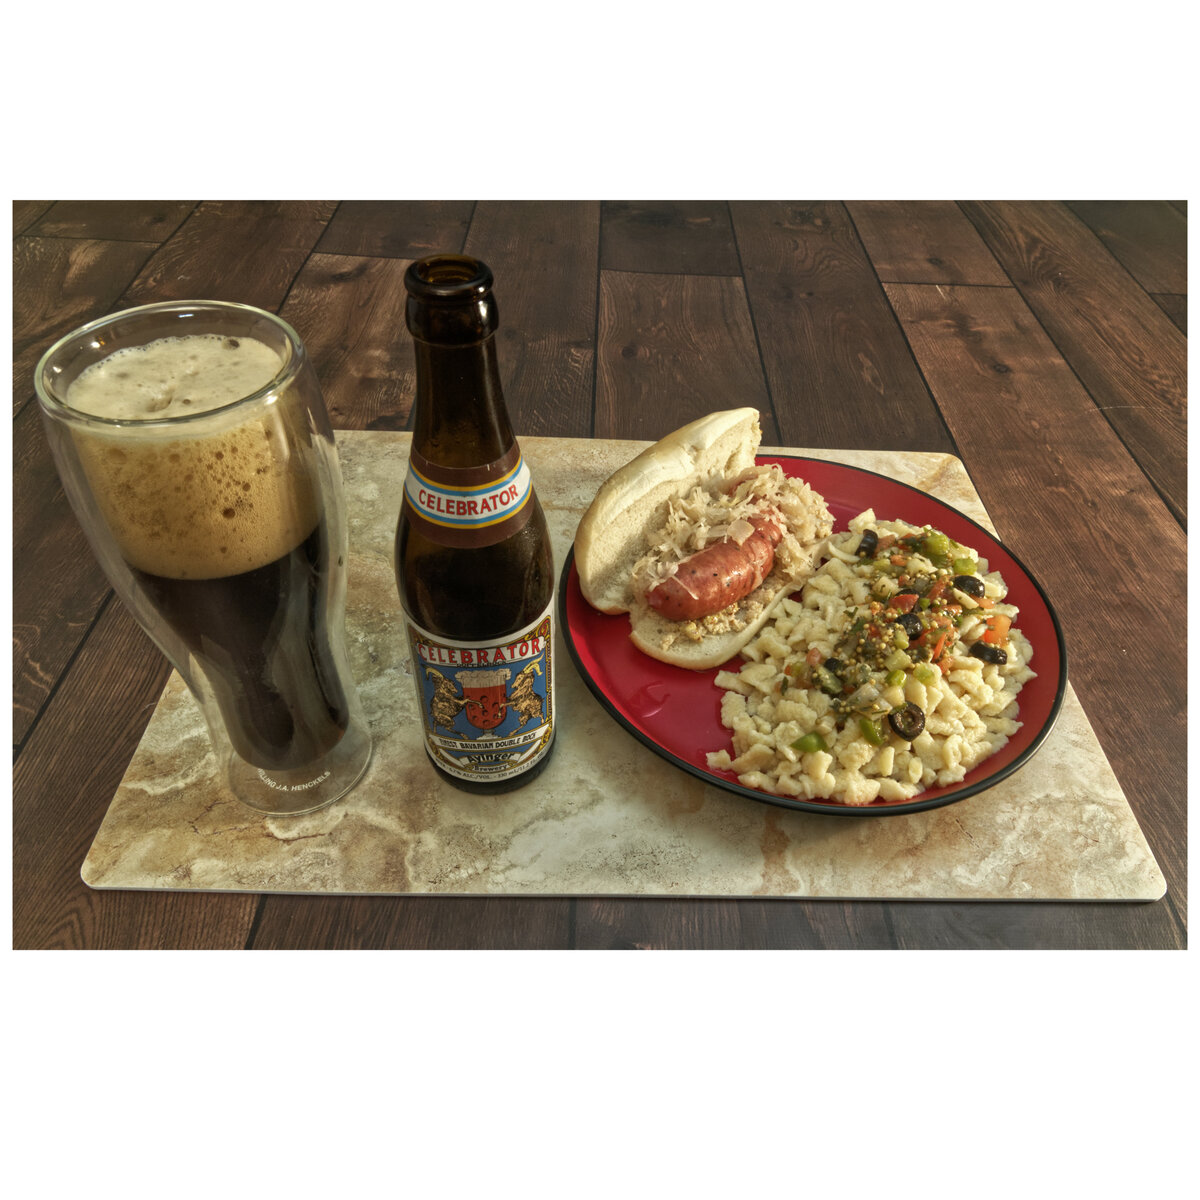 Bratwurst Sandwich with Spaetzle and a Doppel Bock Bier